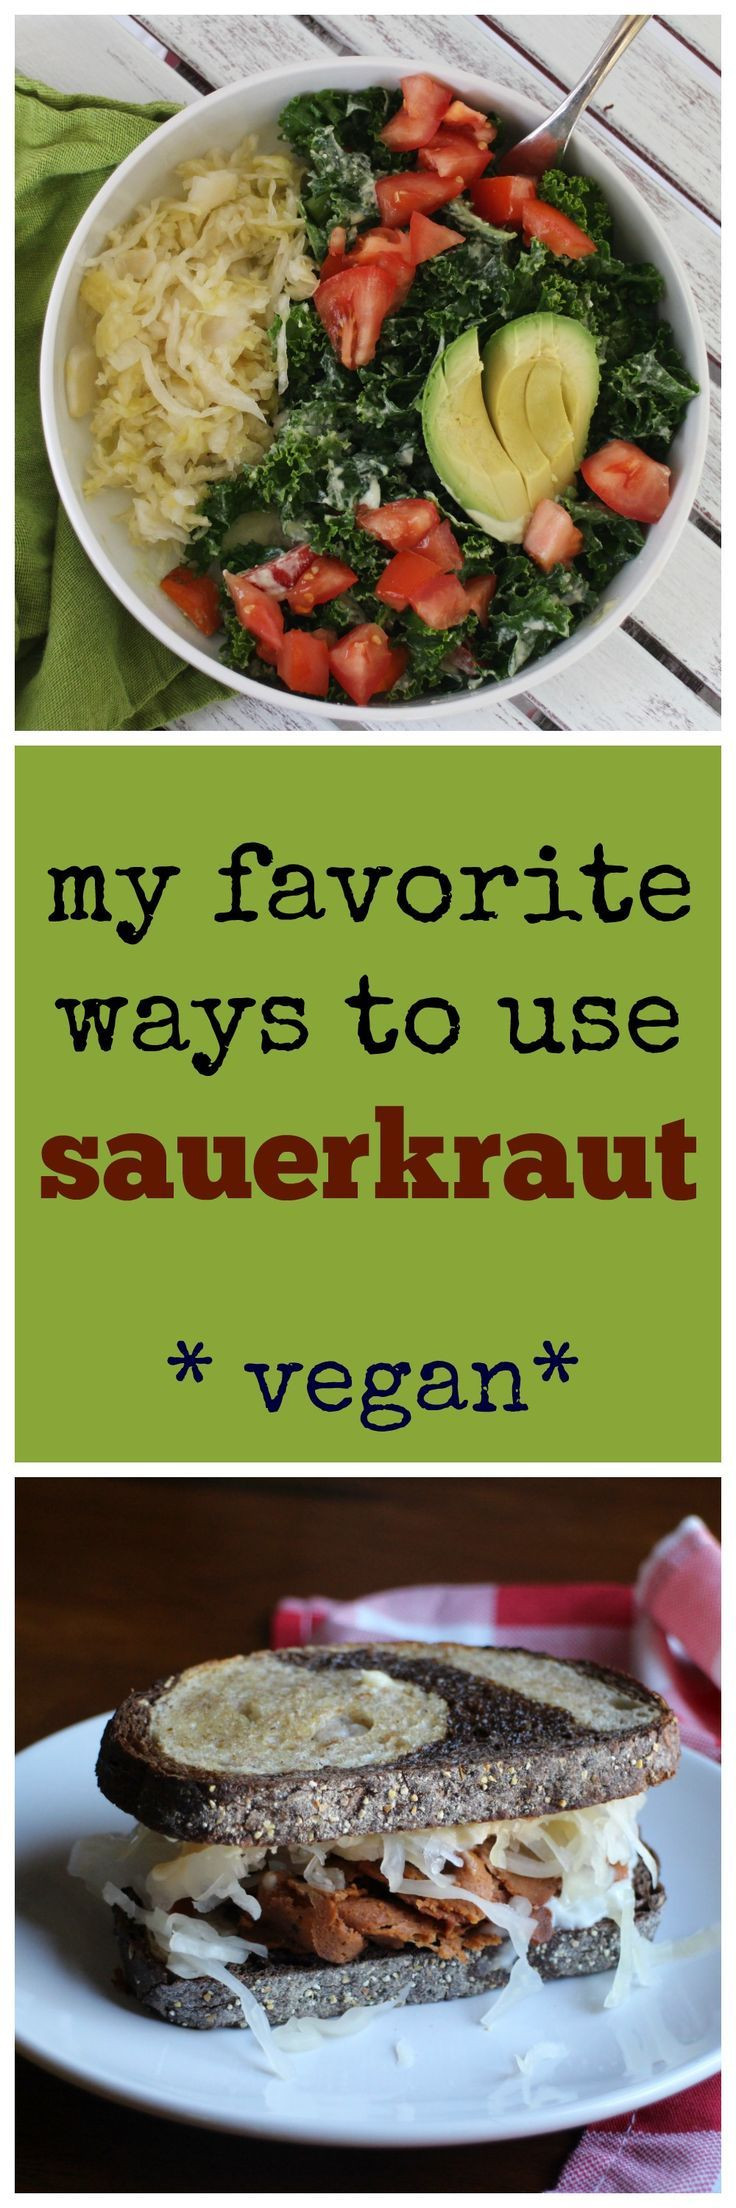 Vegan Sauerkraut Recipes
 My favorite vegan sauerkraut recipes & uses